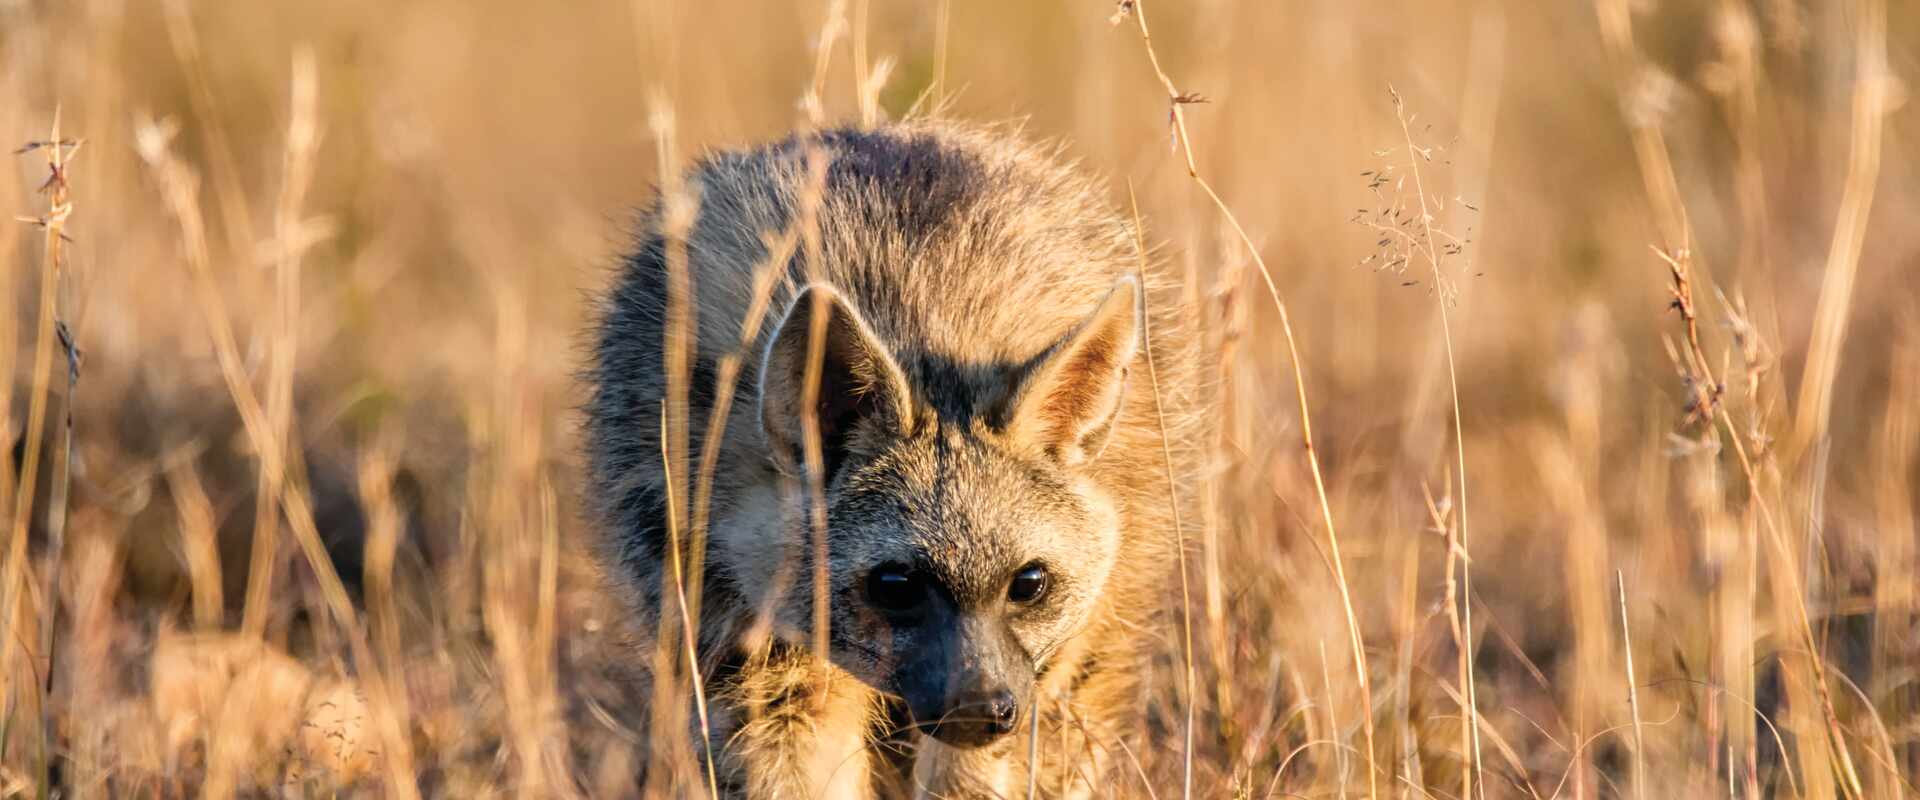 Image of Aardwolf through African bush, fauna in Africa